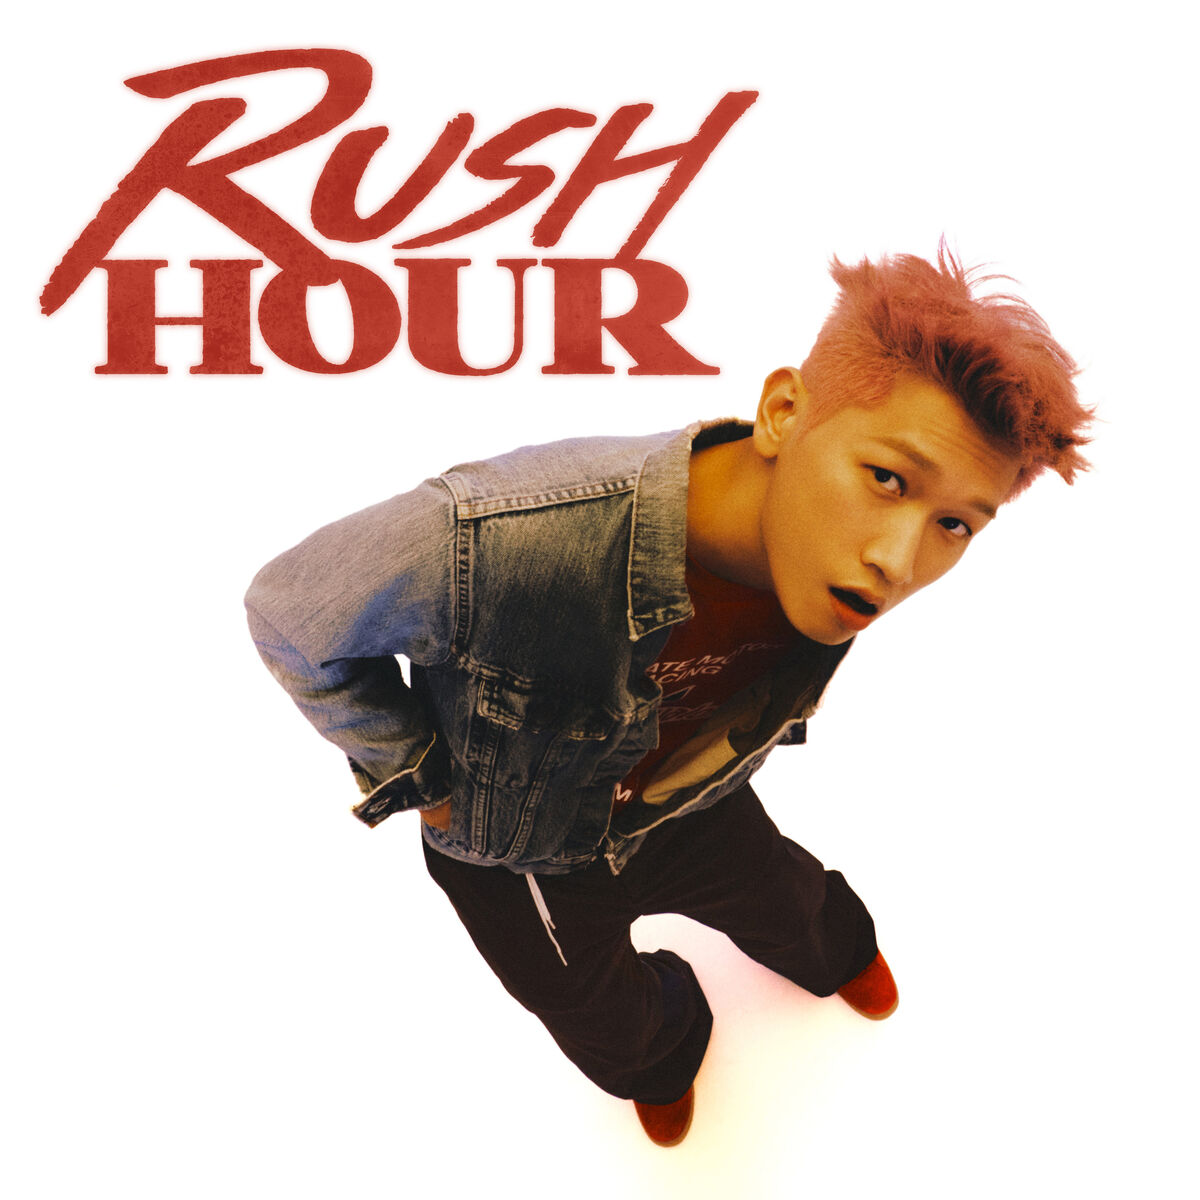 Rush Hour (Feat. j-hope of BTS) | BTS Wiki | Fandom